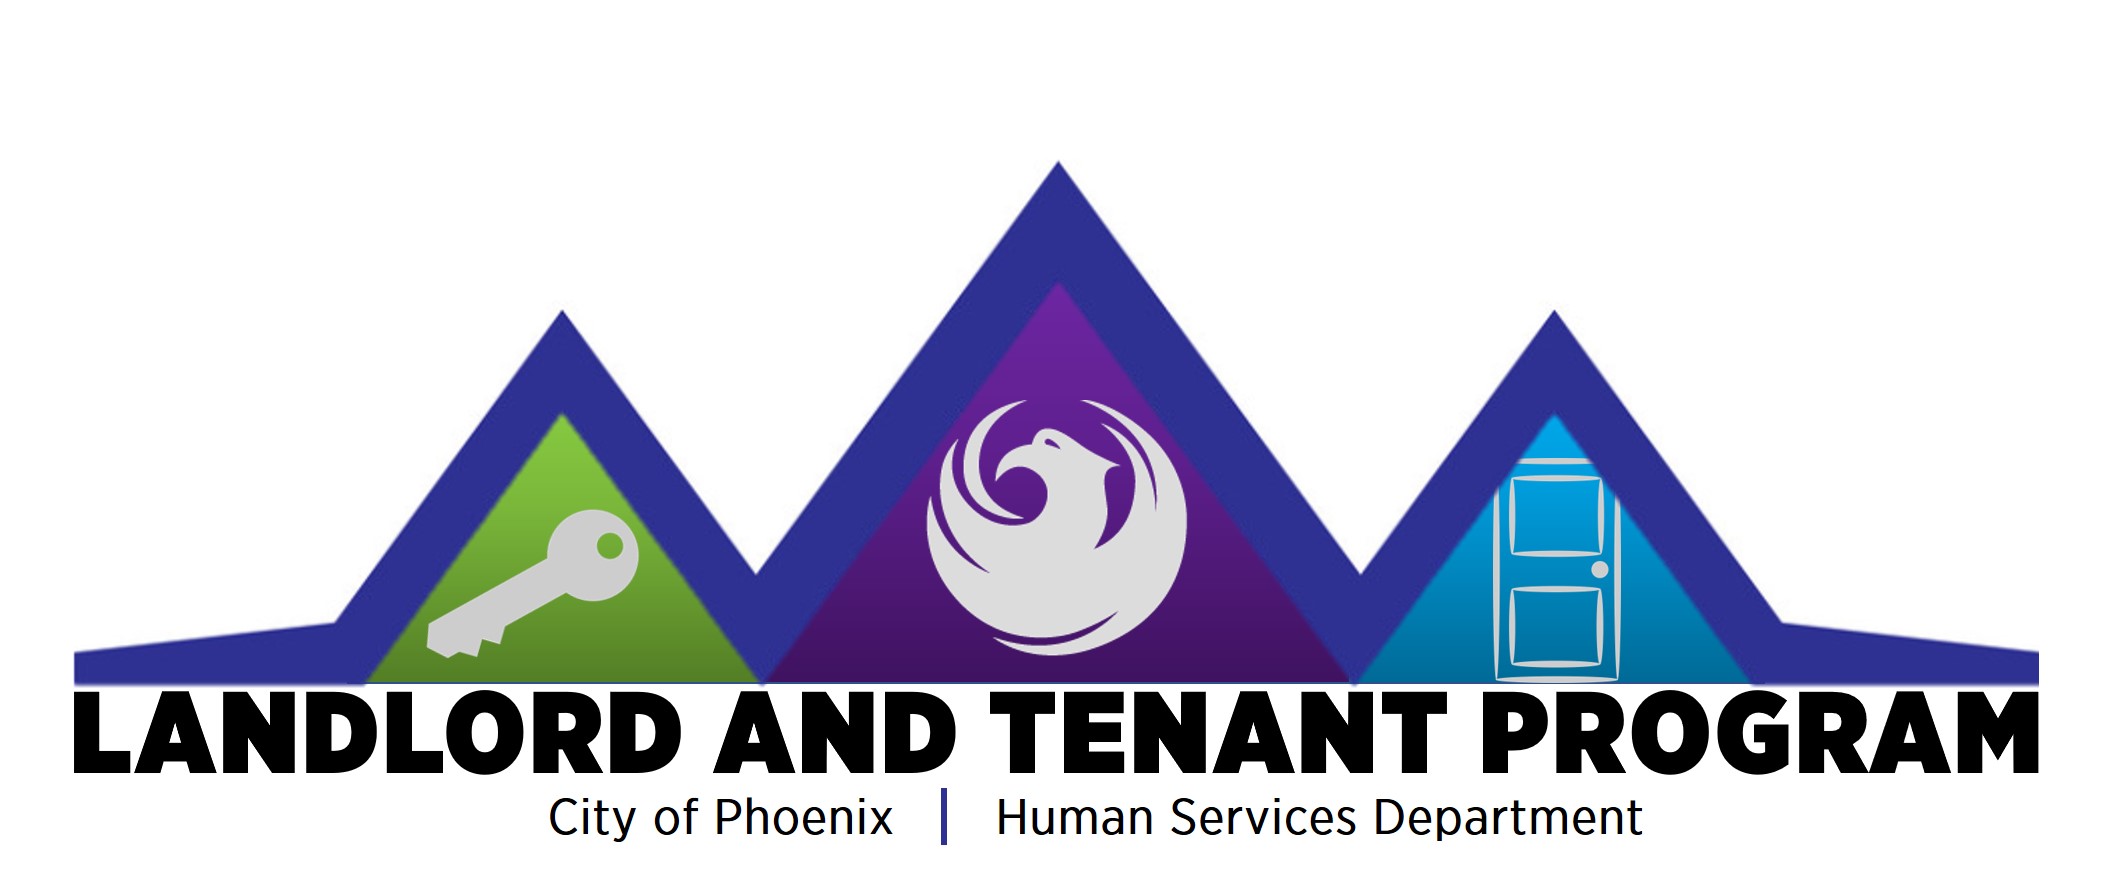 Landlord tenant program logo